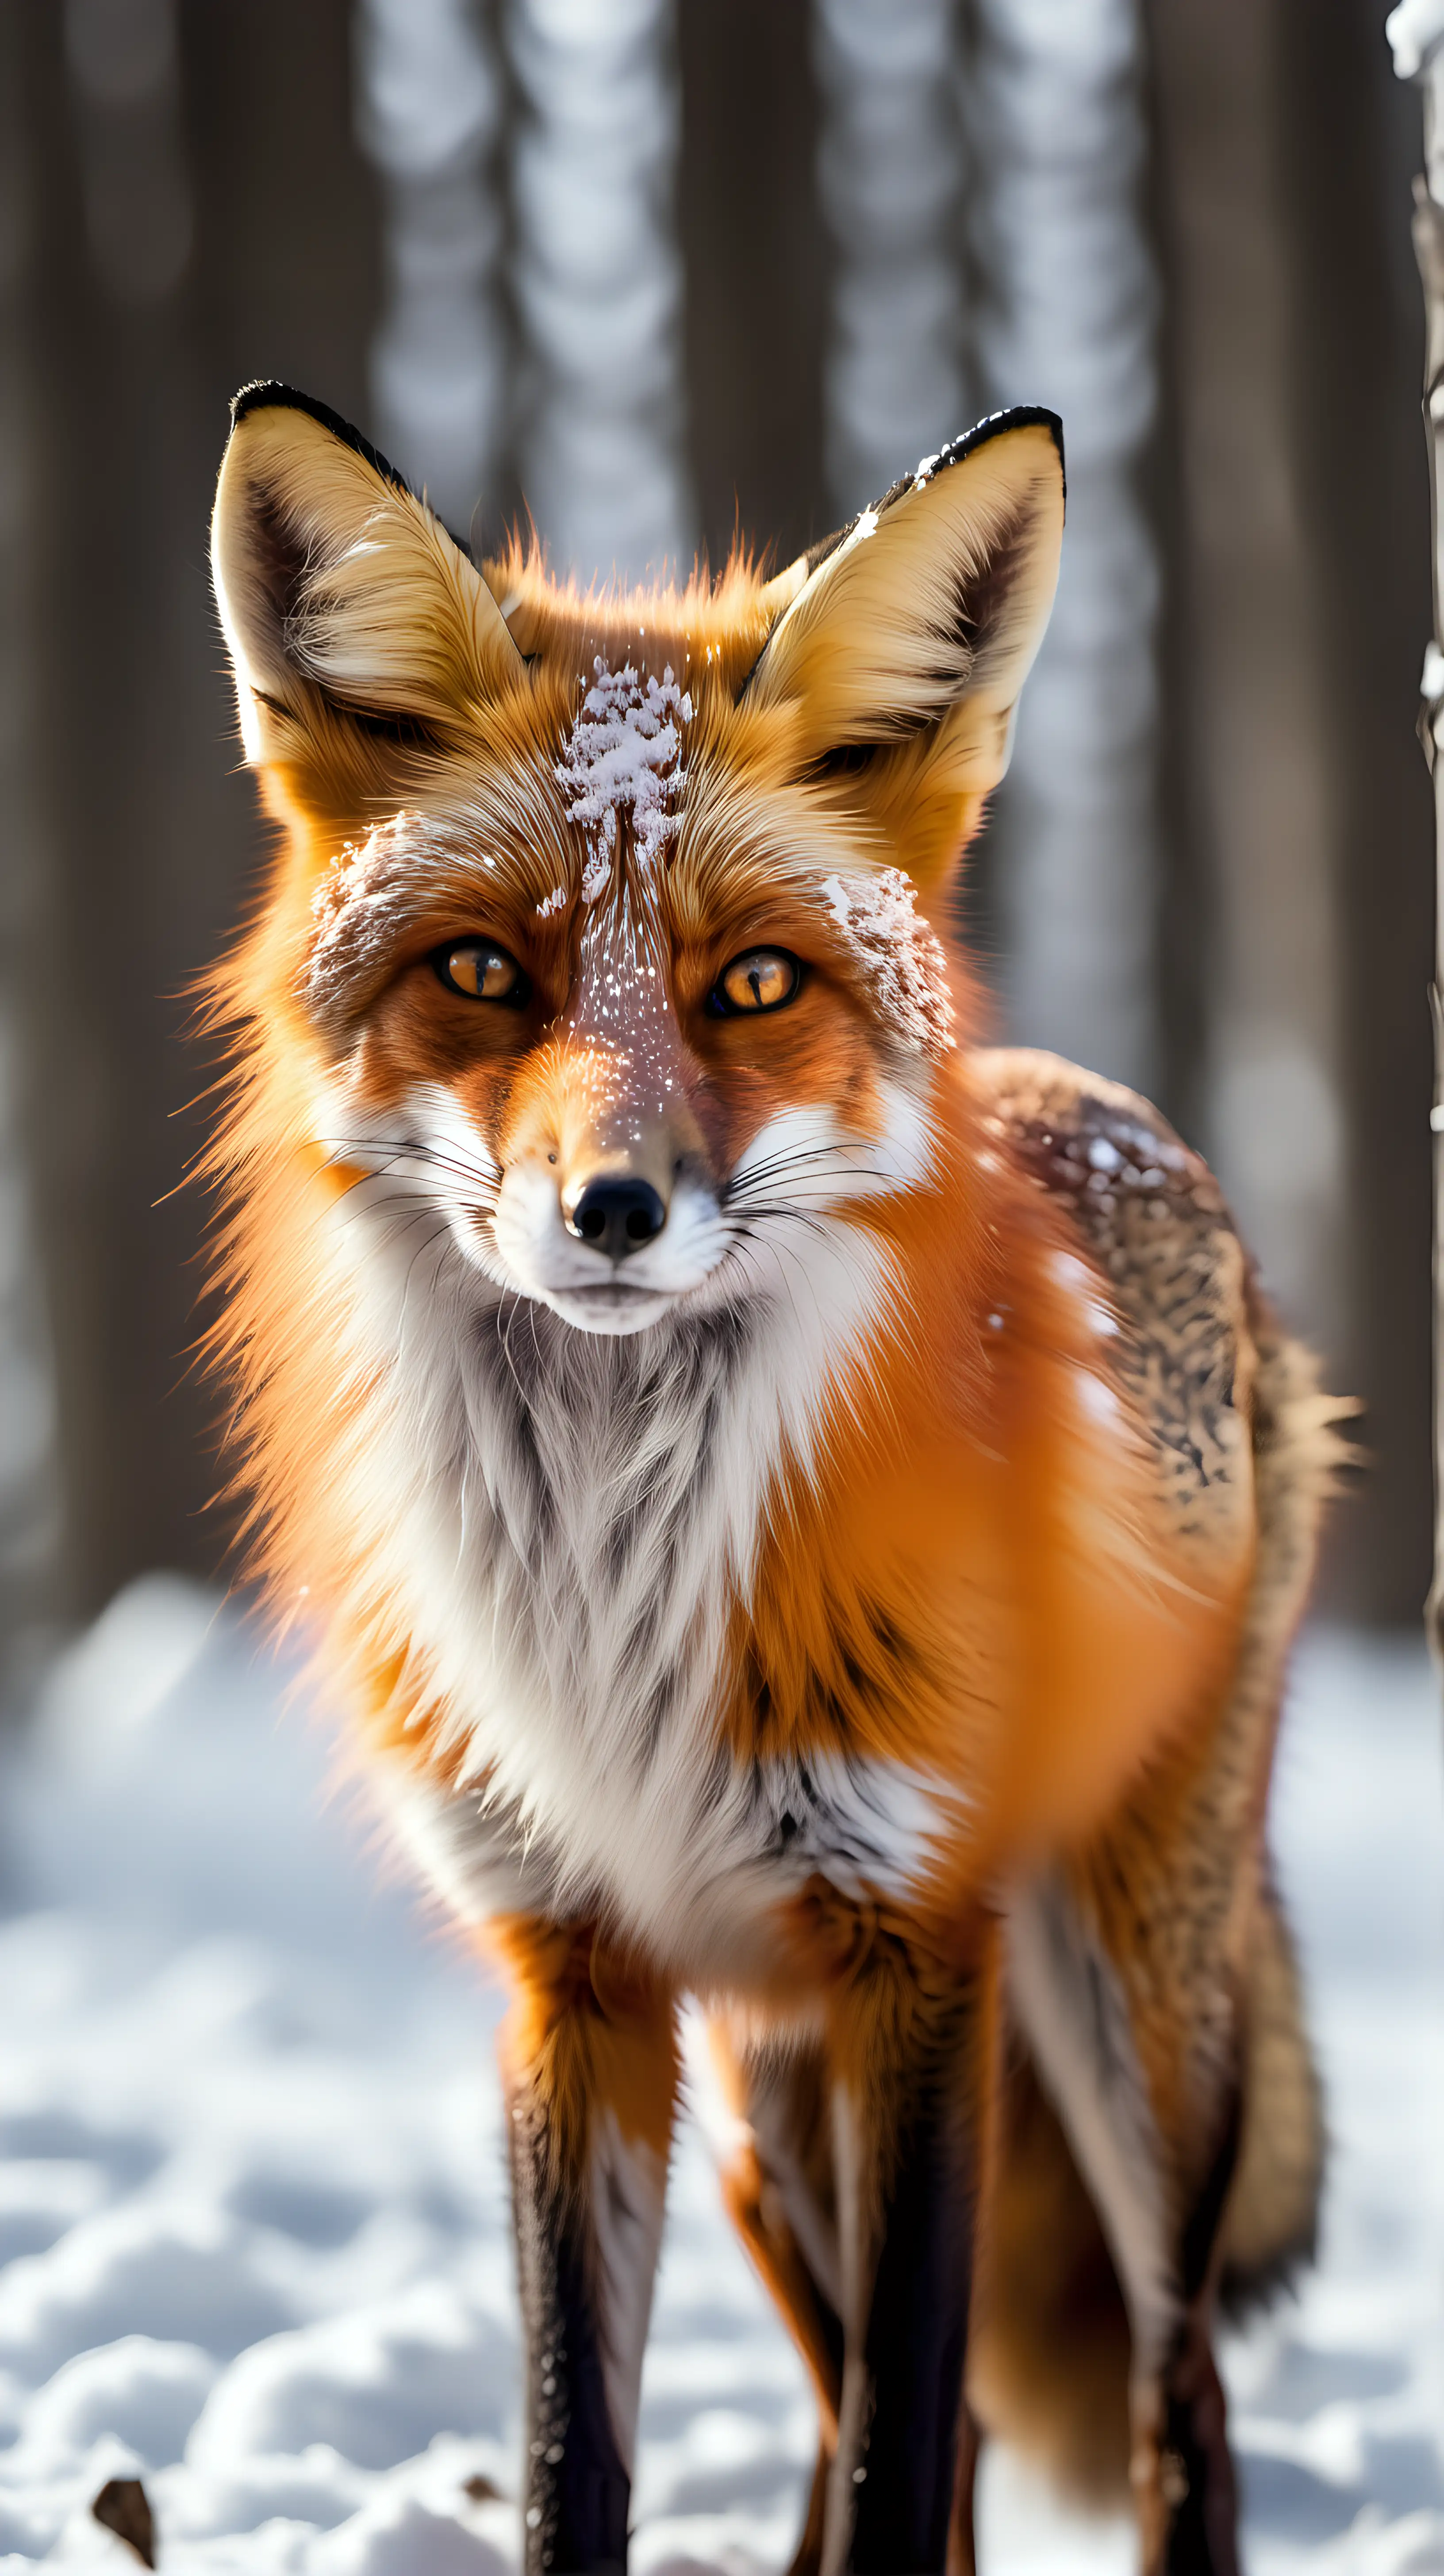 Majestic Fox Portrait in Snowy Forest